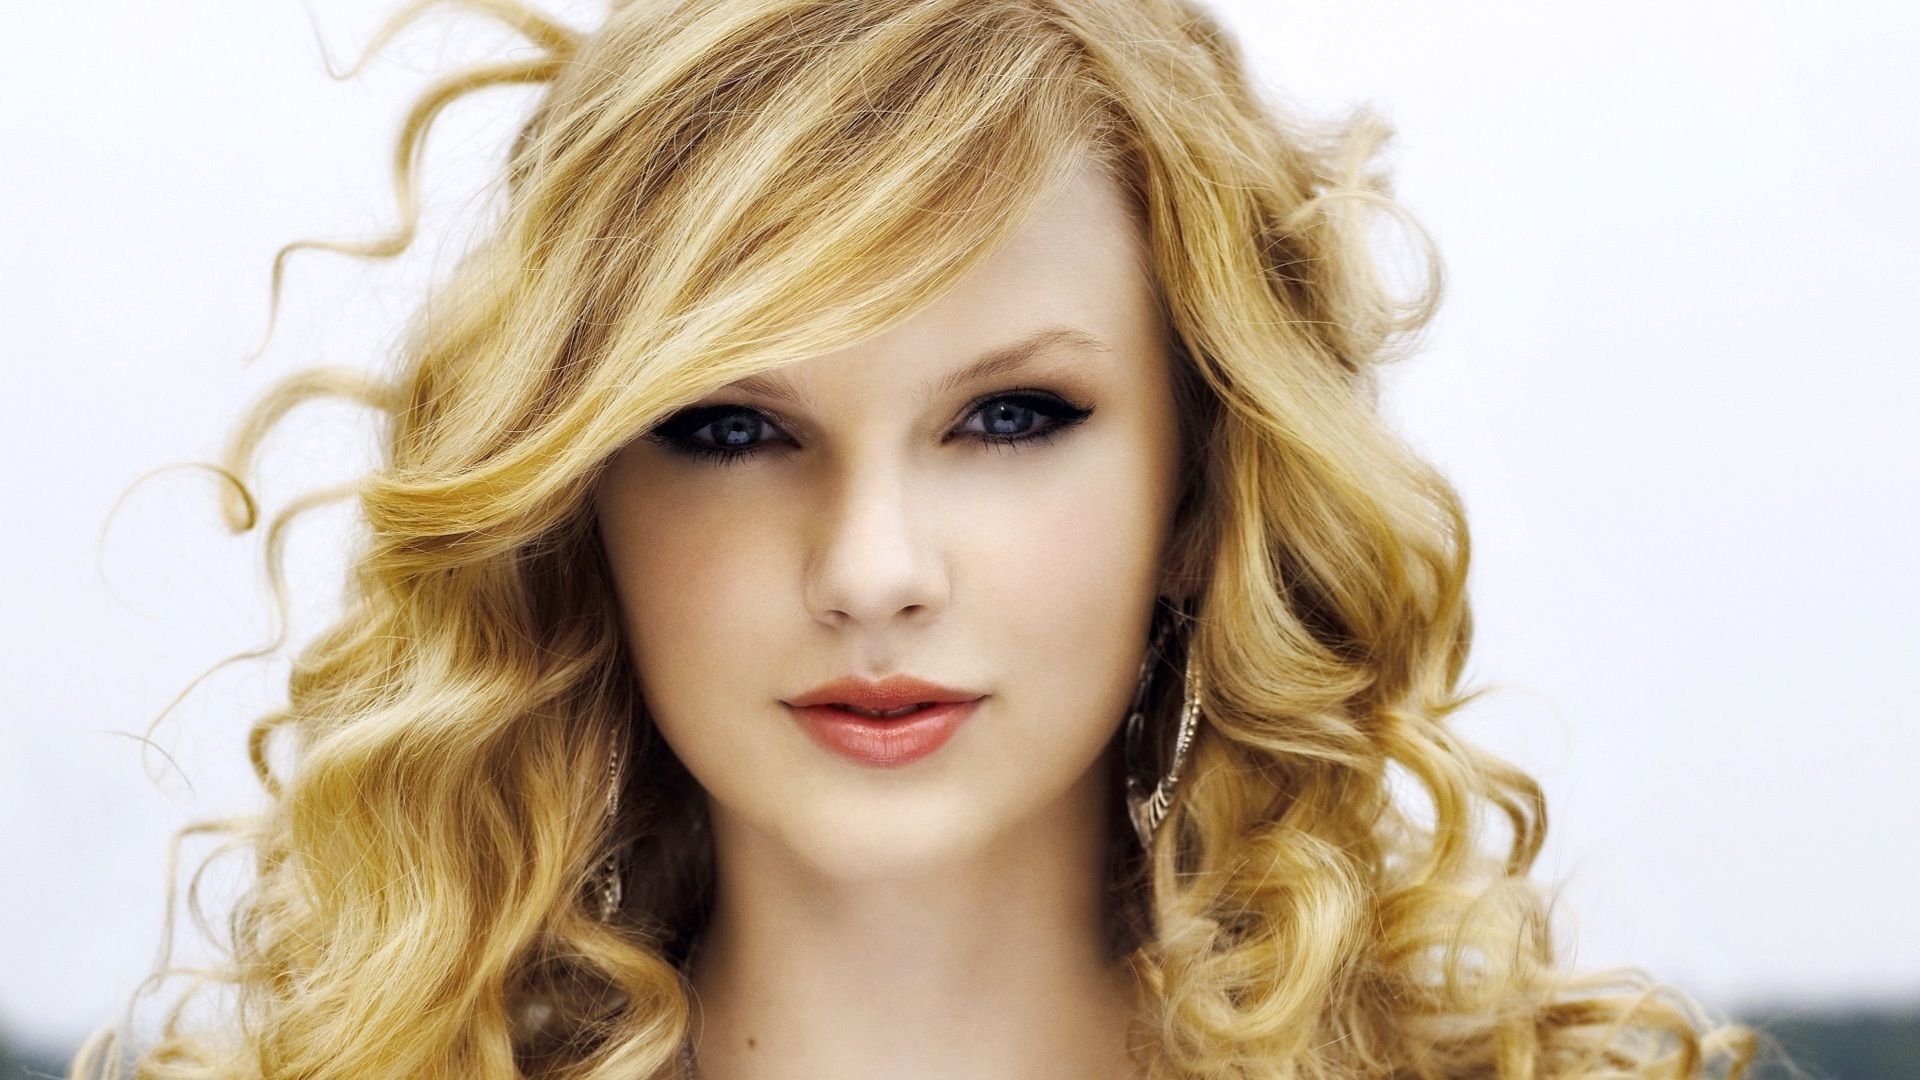 Taylor Swift Widescreen | Download Free Desktop Wallpaper Images ...